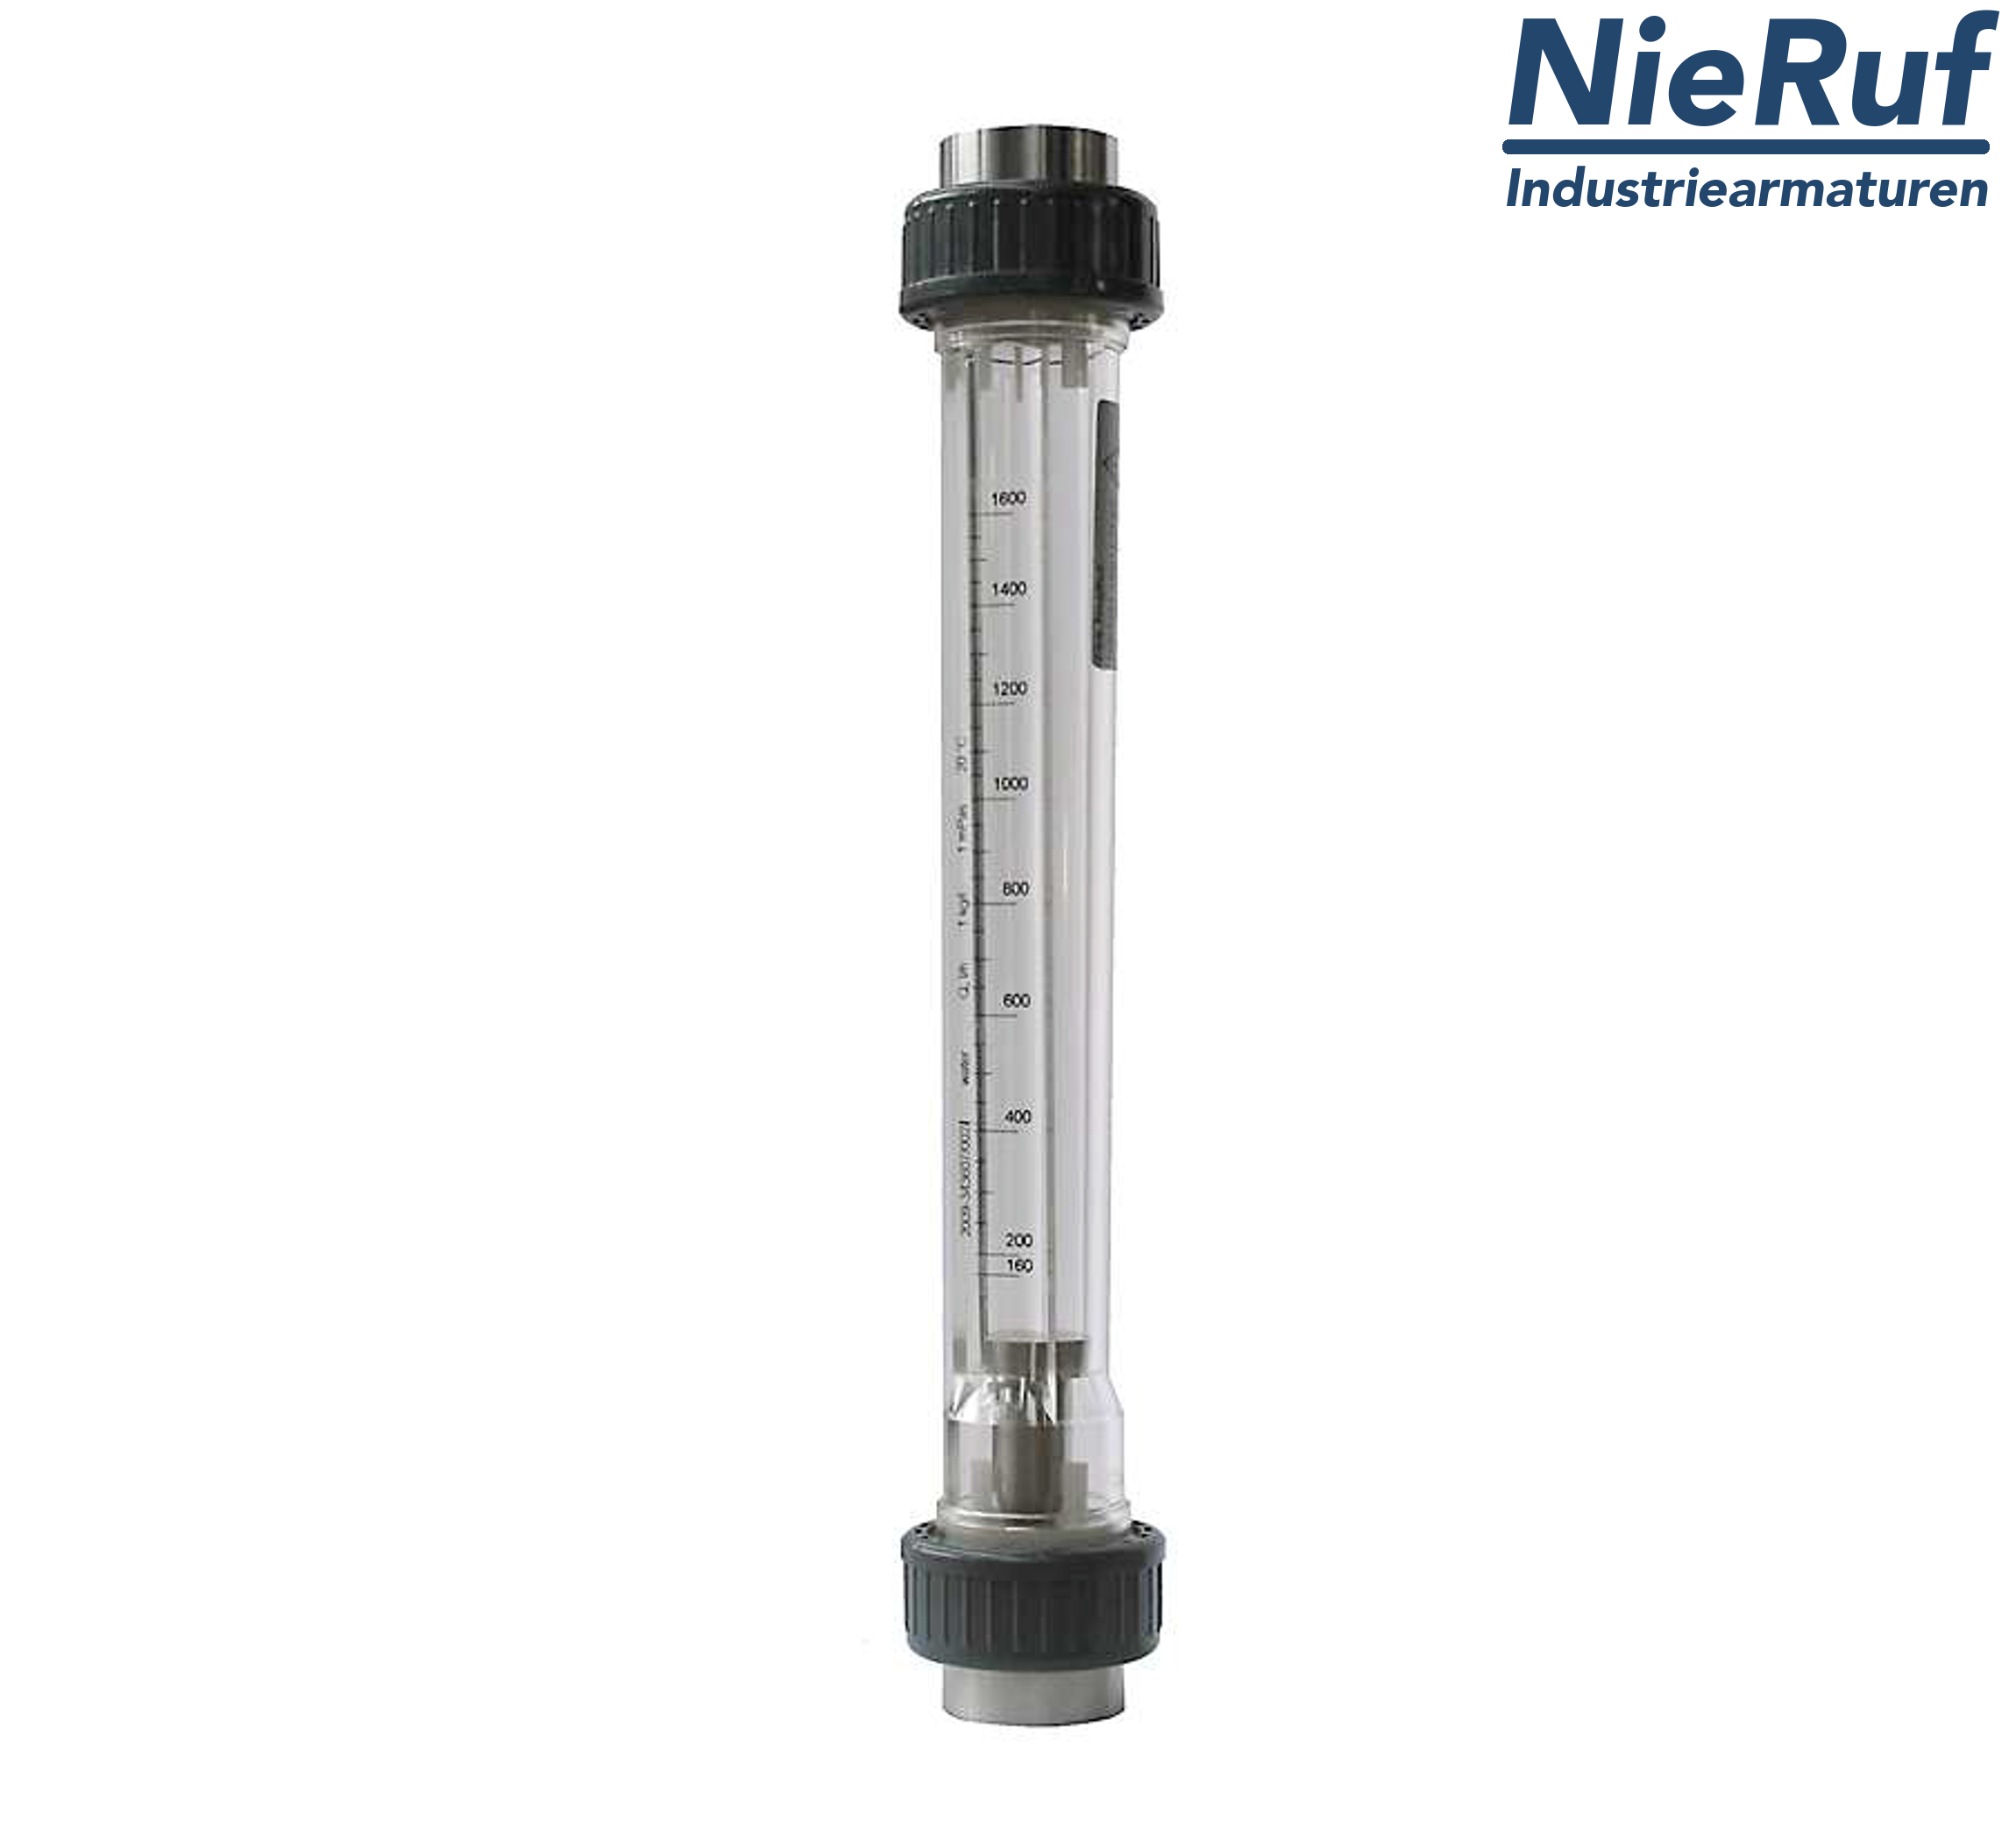 Variable area flowmeter 3/4" inch NPT 100.0 - 1000 l/h water FKM